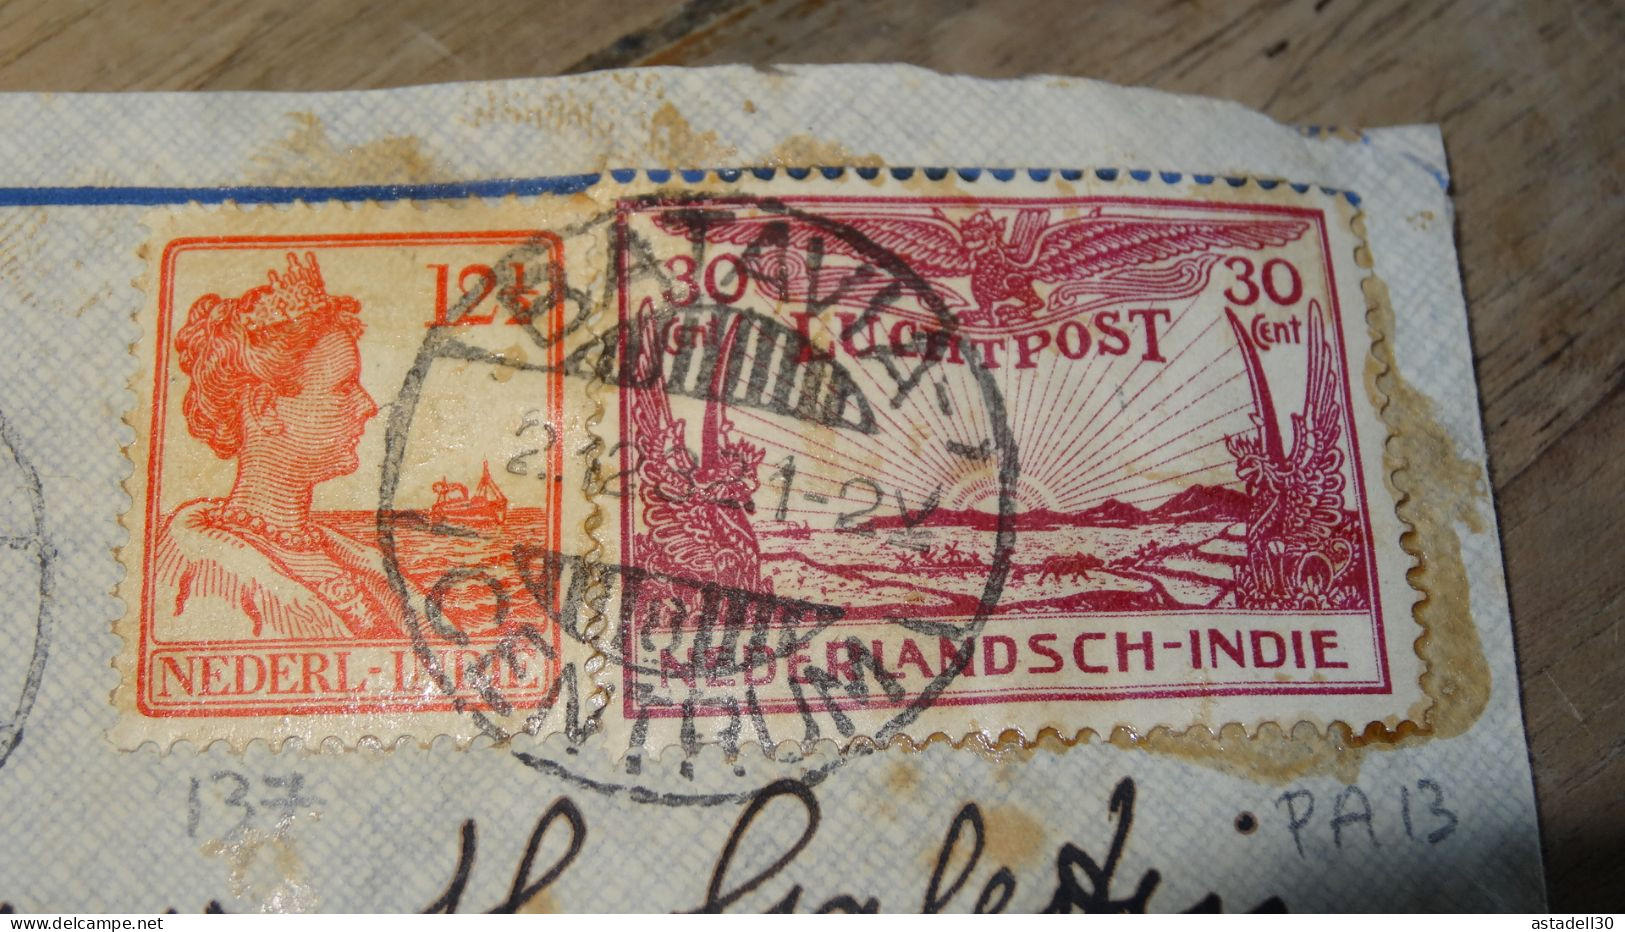 NEDERLANDISCH INDIE, Cover Luchtpost To Holland - 1932 ......... ..... 240424 ....... CL5-9 - India Holandeses